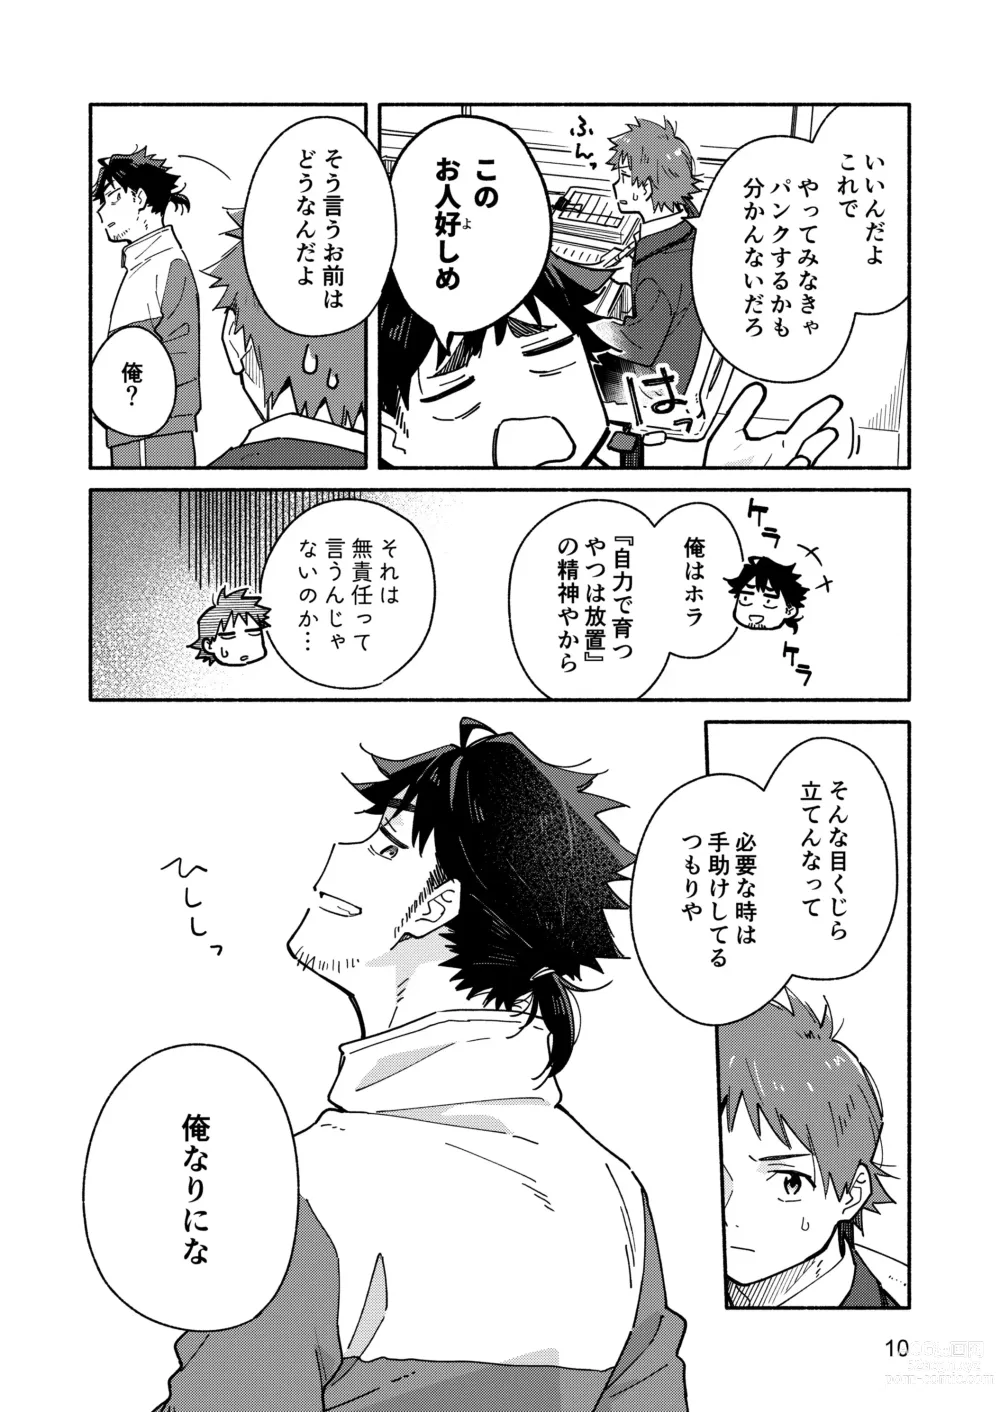 Page 9 of doujinshi Kichiku Sensei no Kagai Jugyou - The sadistic education record:1